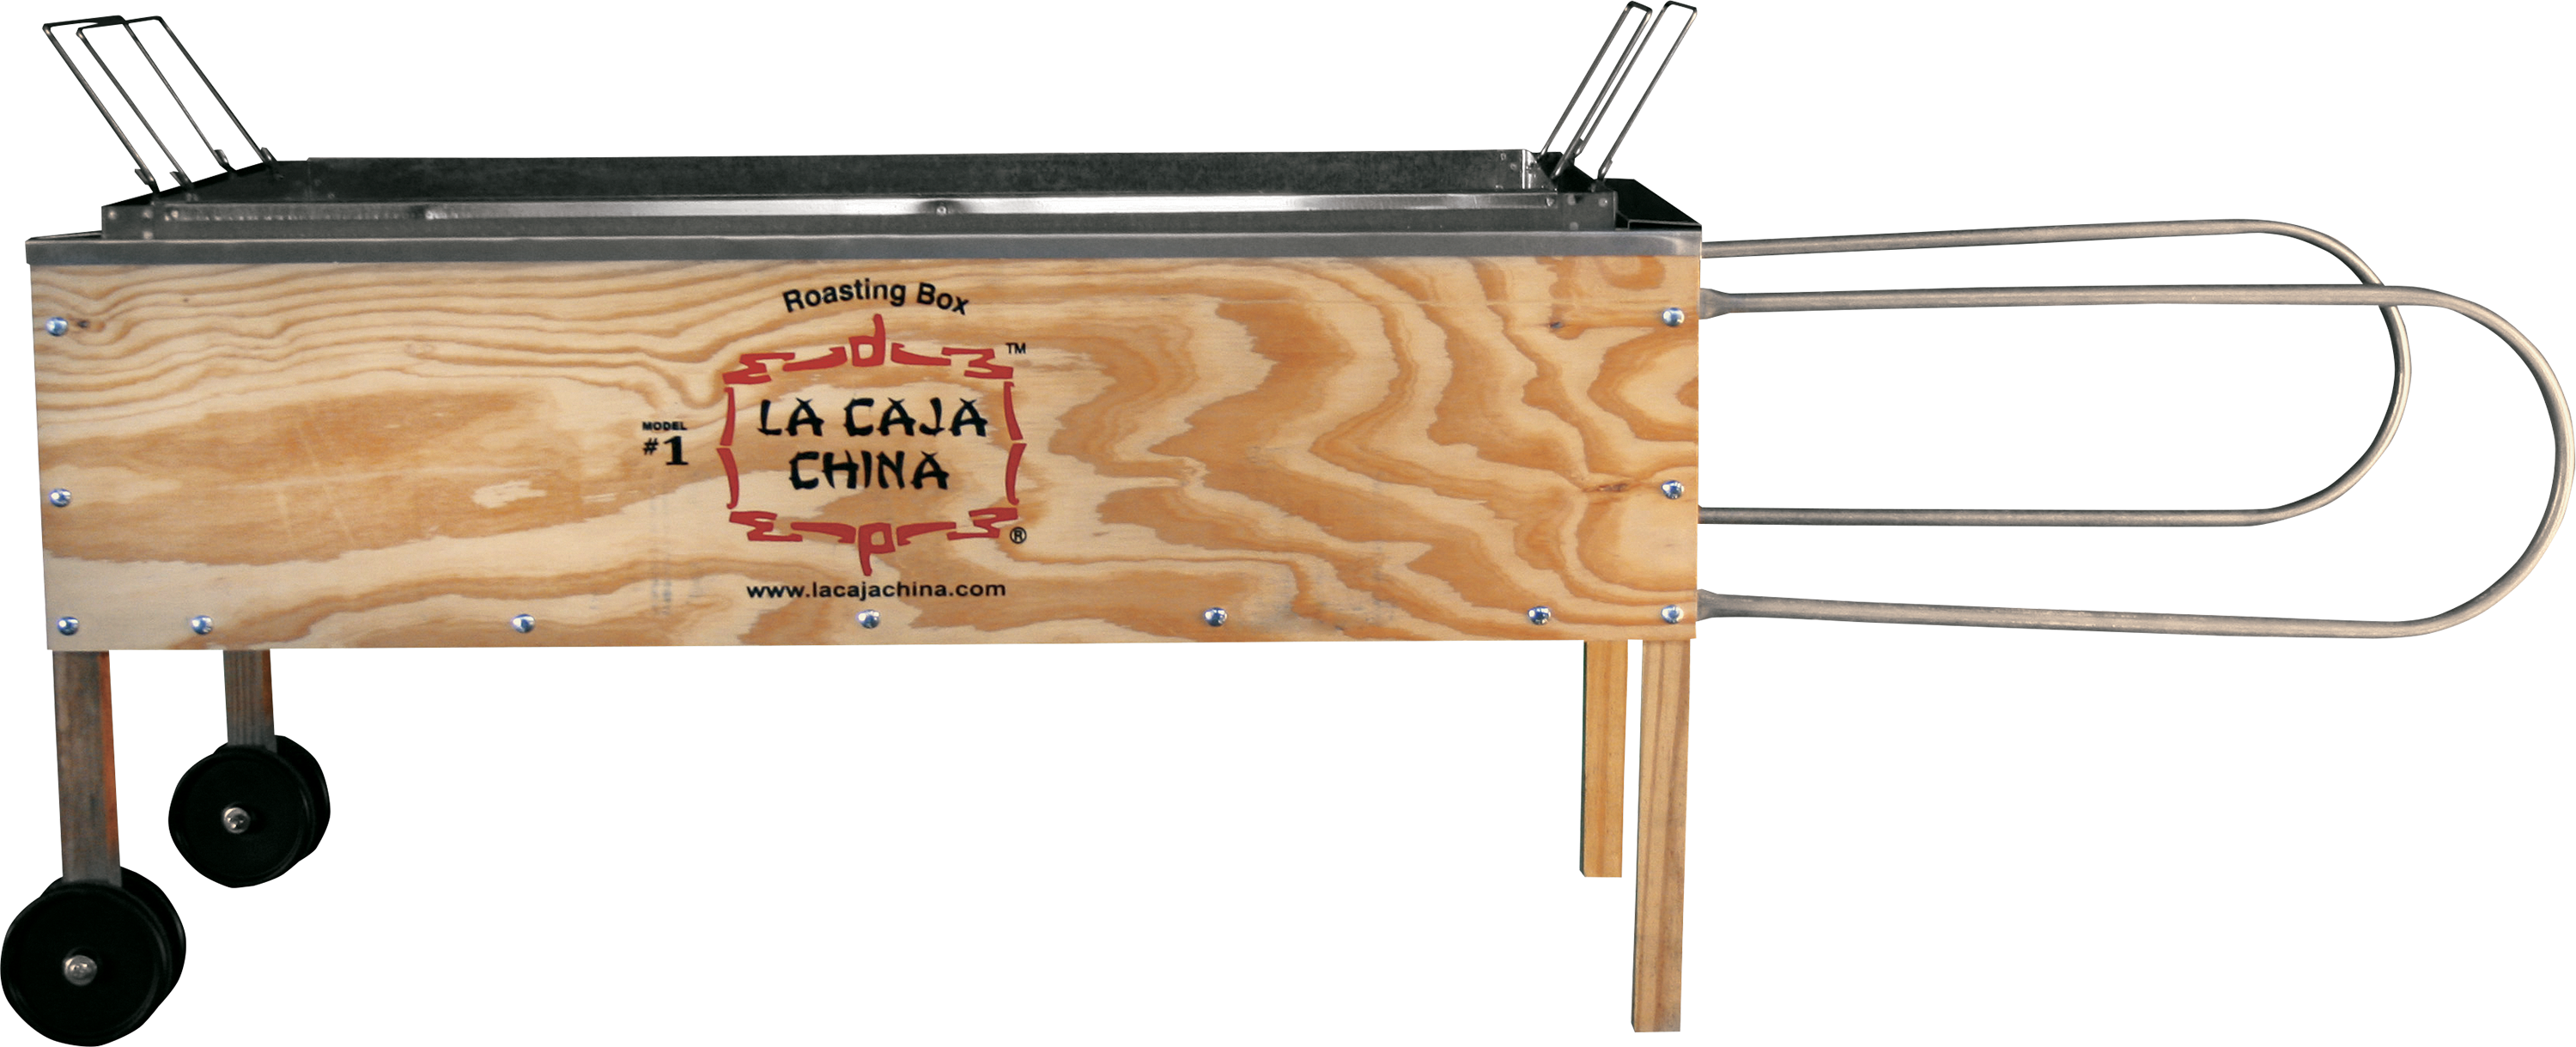 La Caja China roasting Box and Accessories